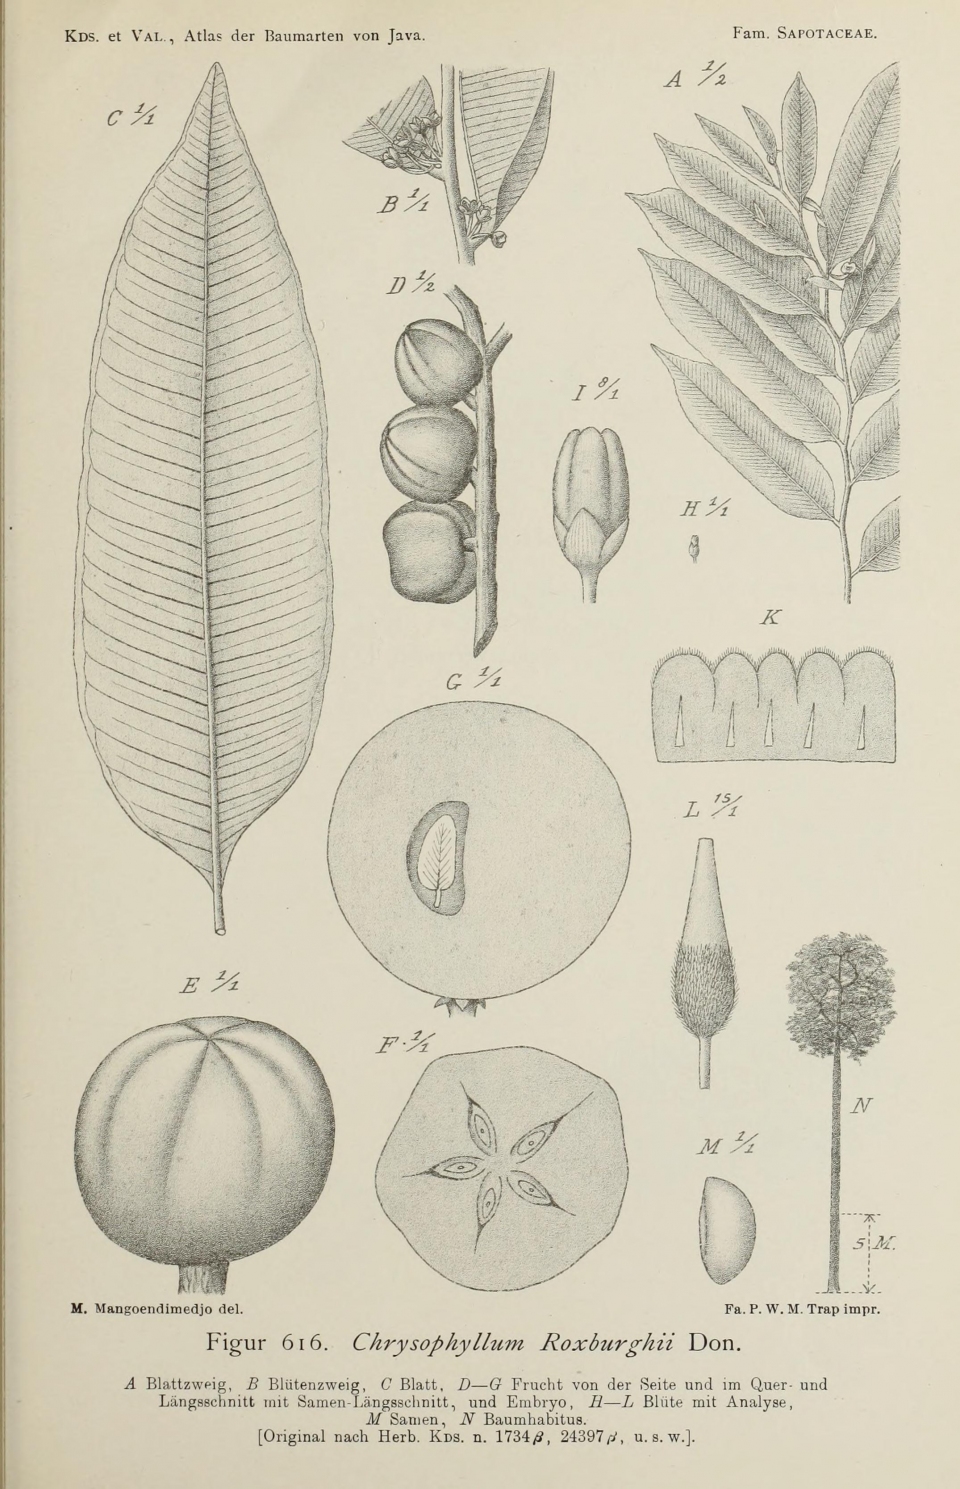 Chrysophyllum roxburghii